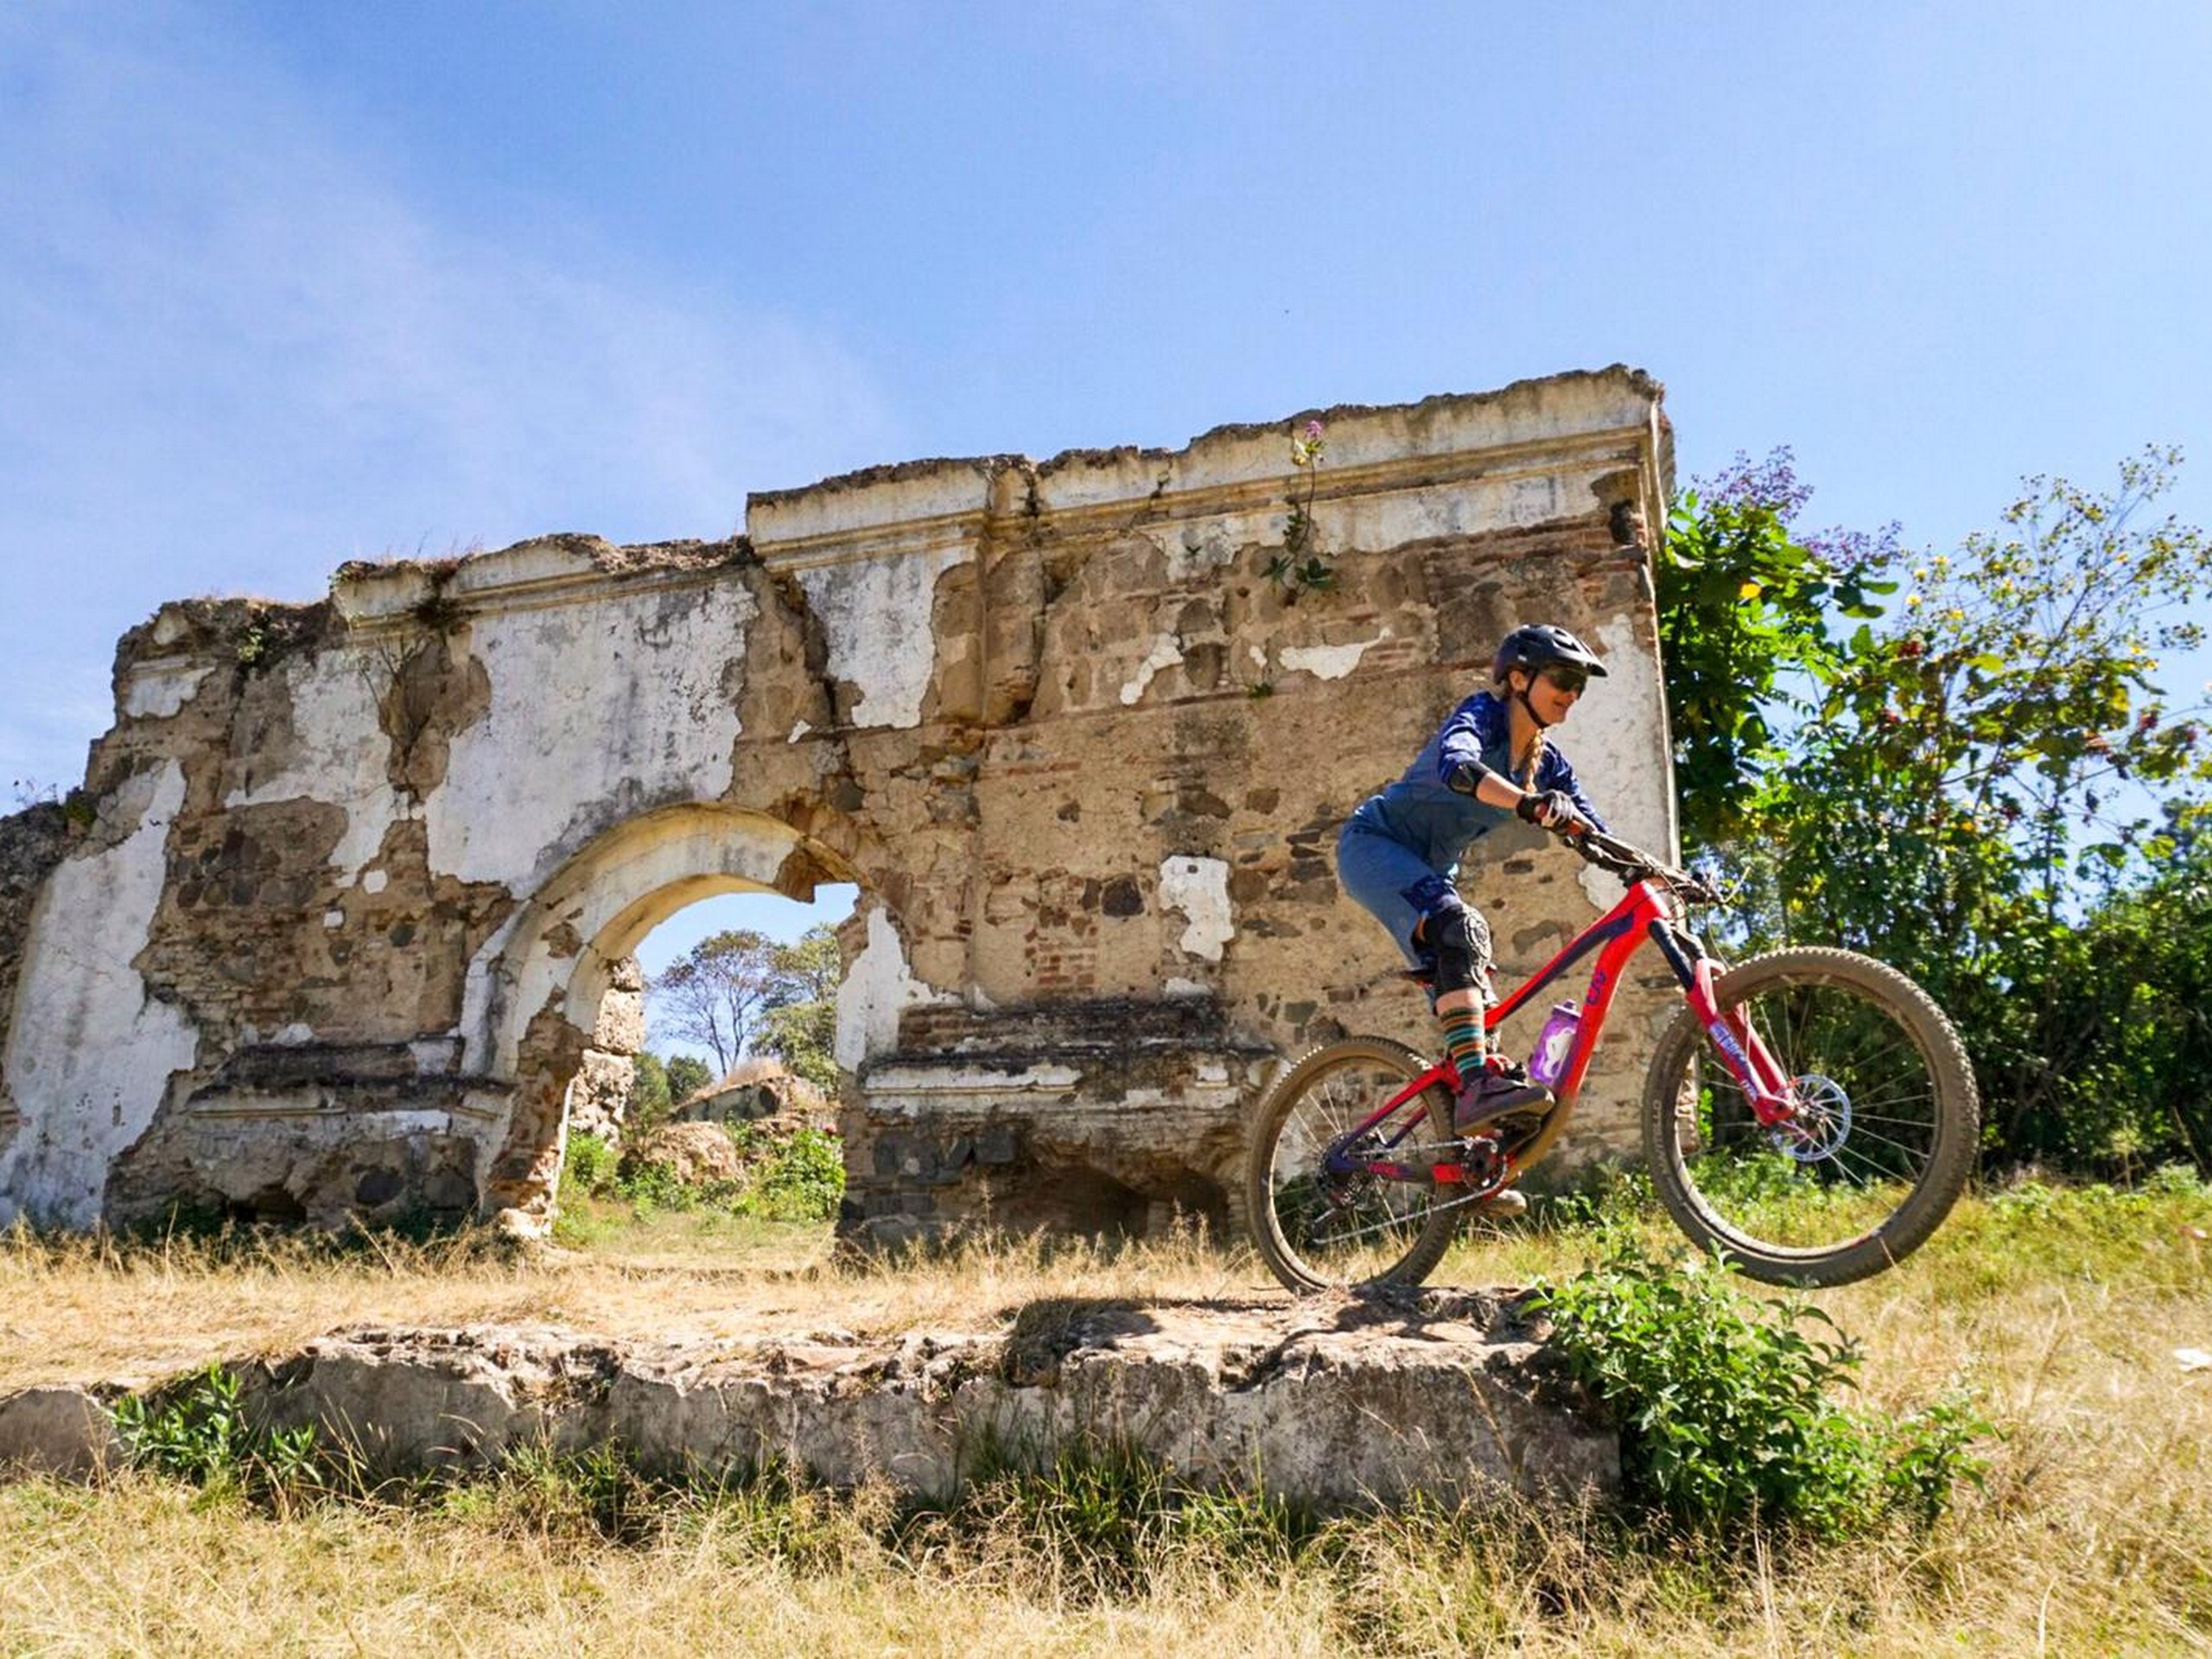 Biking among ruins in Guatemala